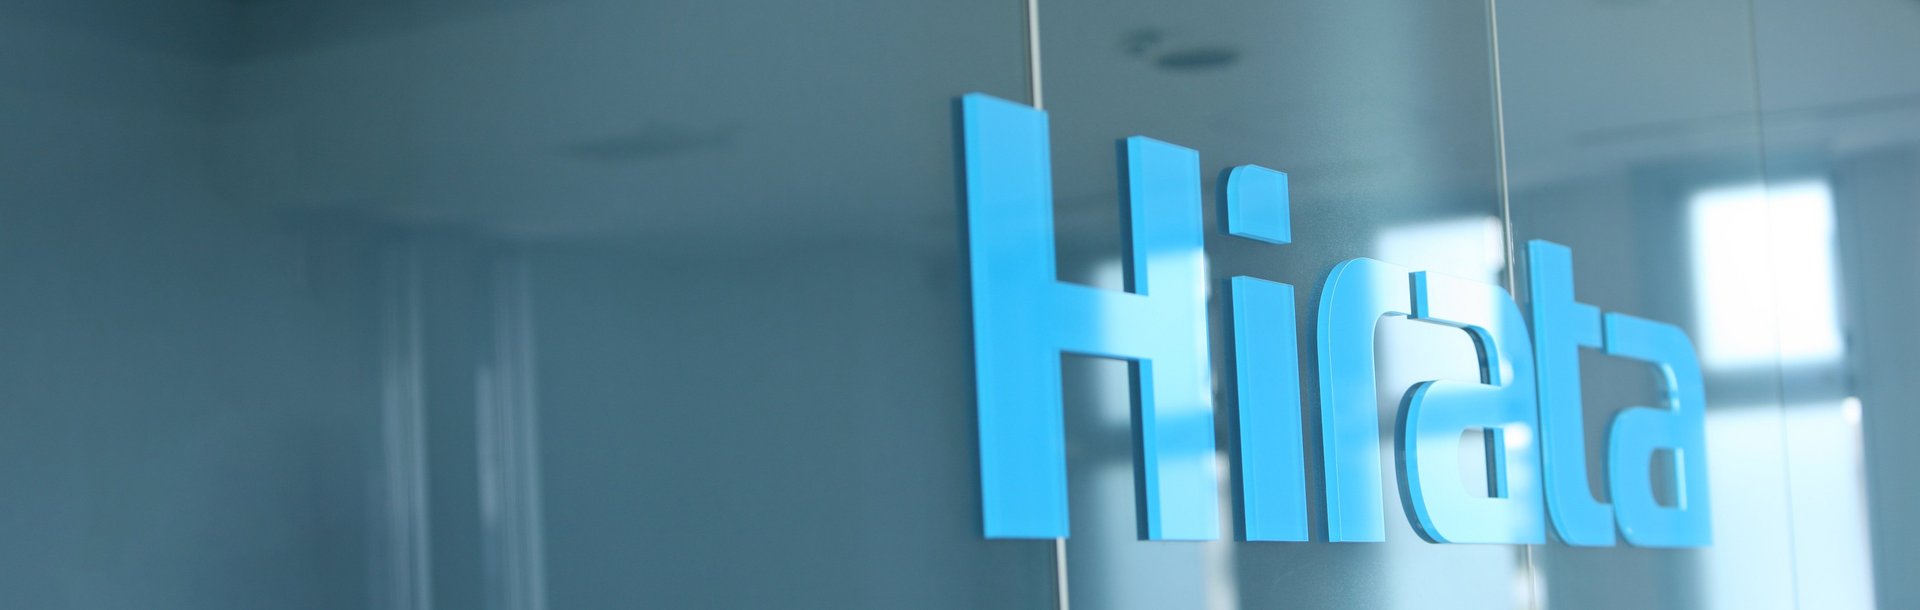 Hirata Corporation Logo auf Gebäude